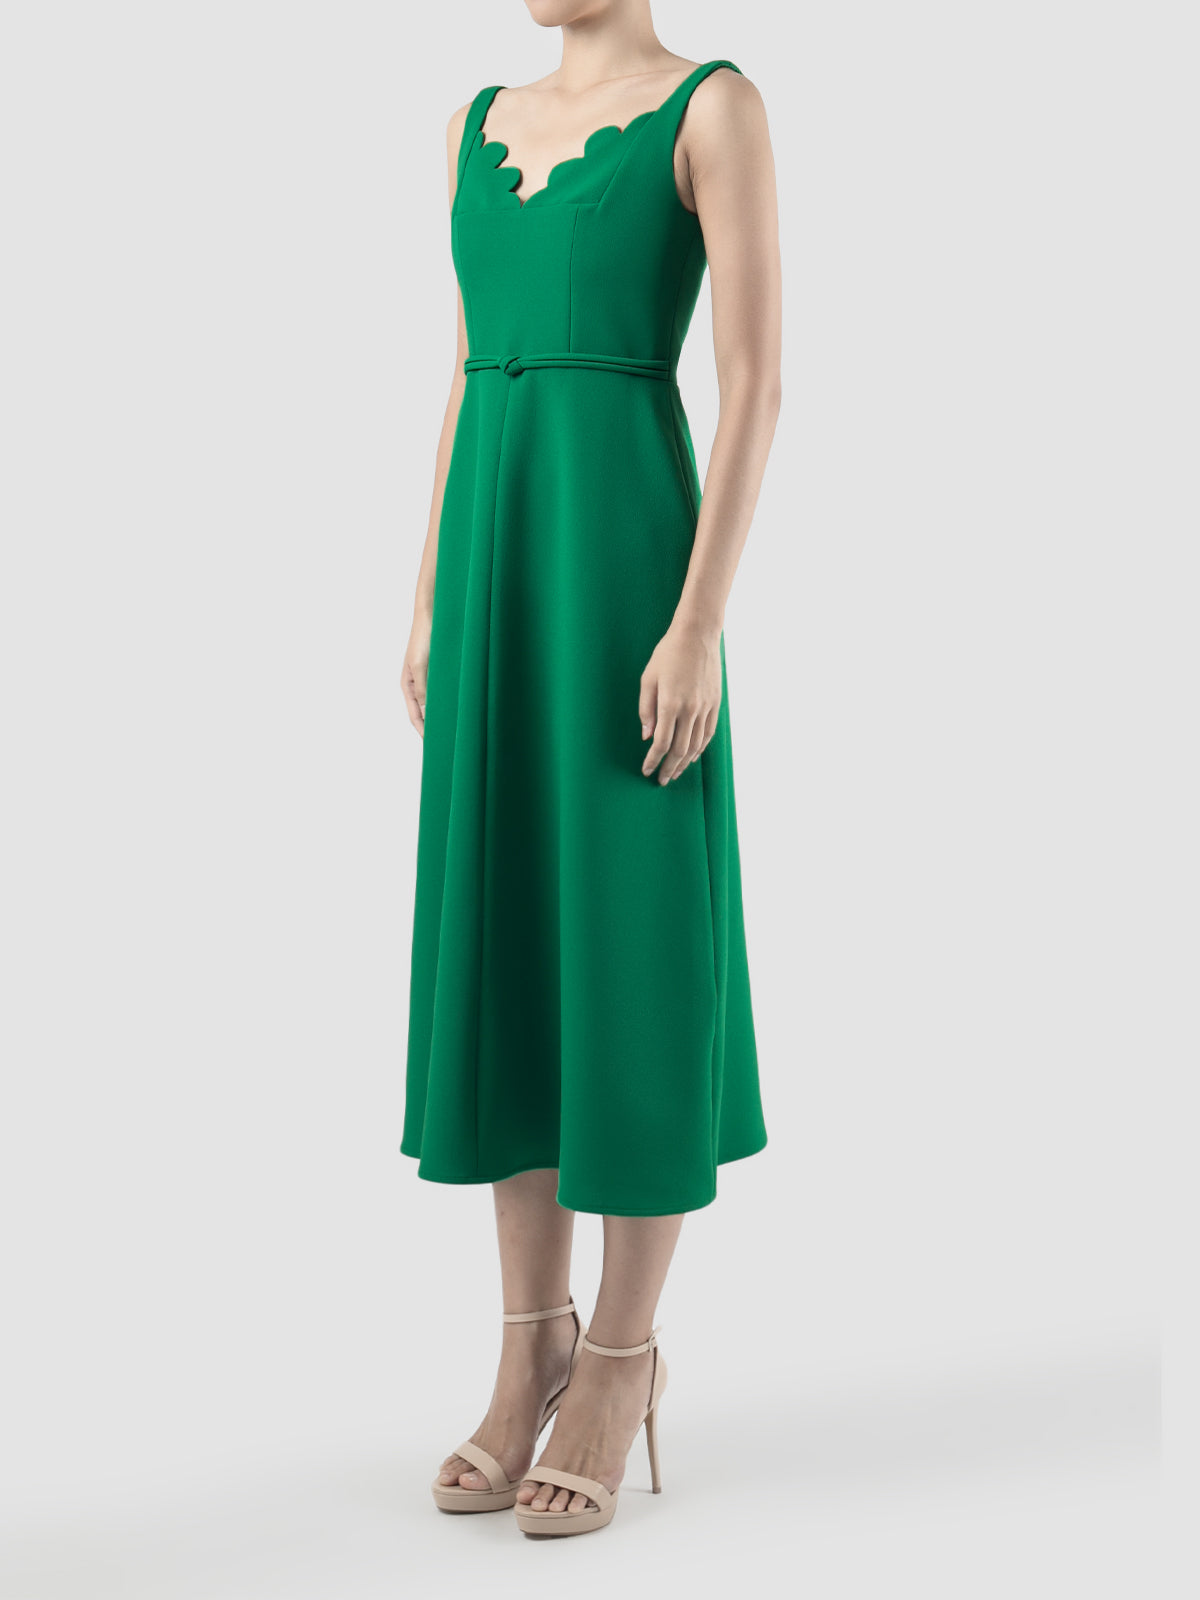 Melody fern green midi dress with scalloped neckline